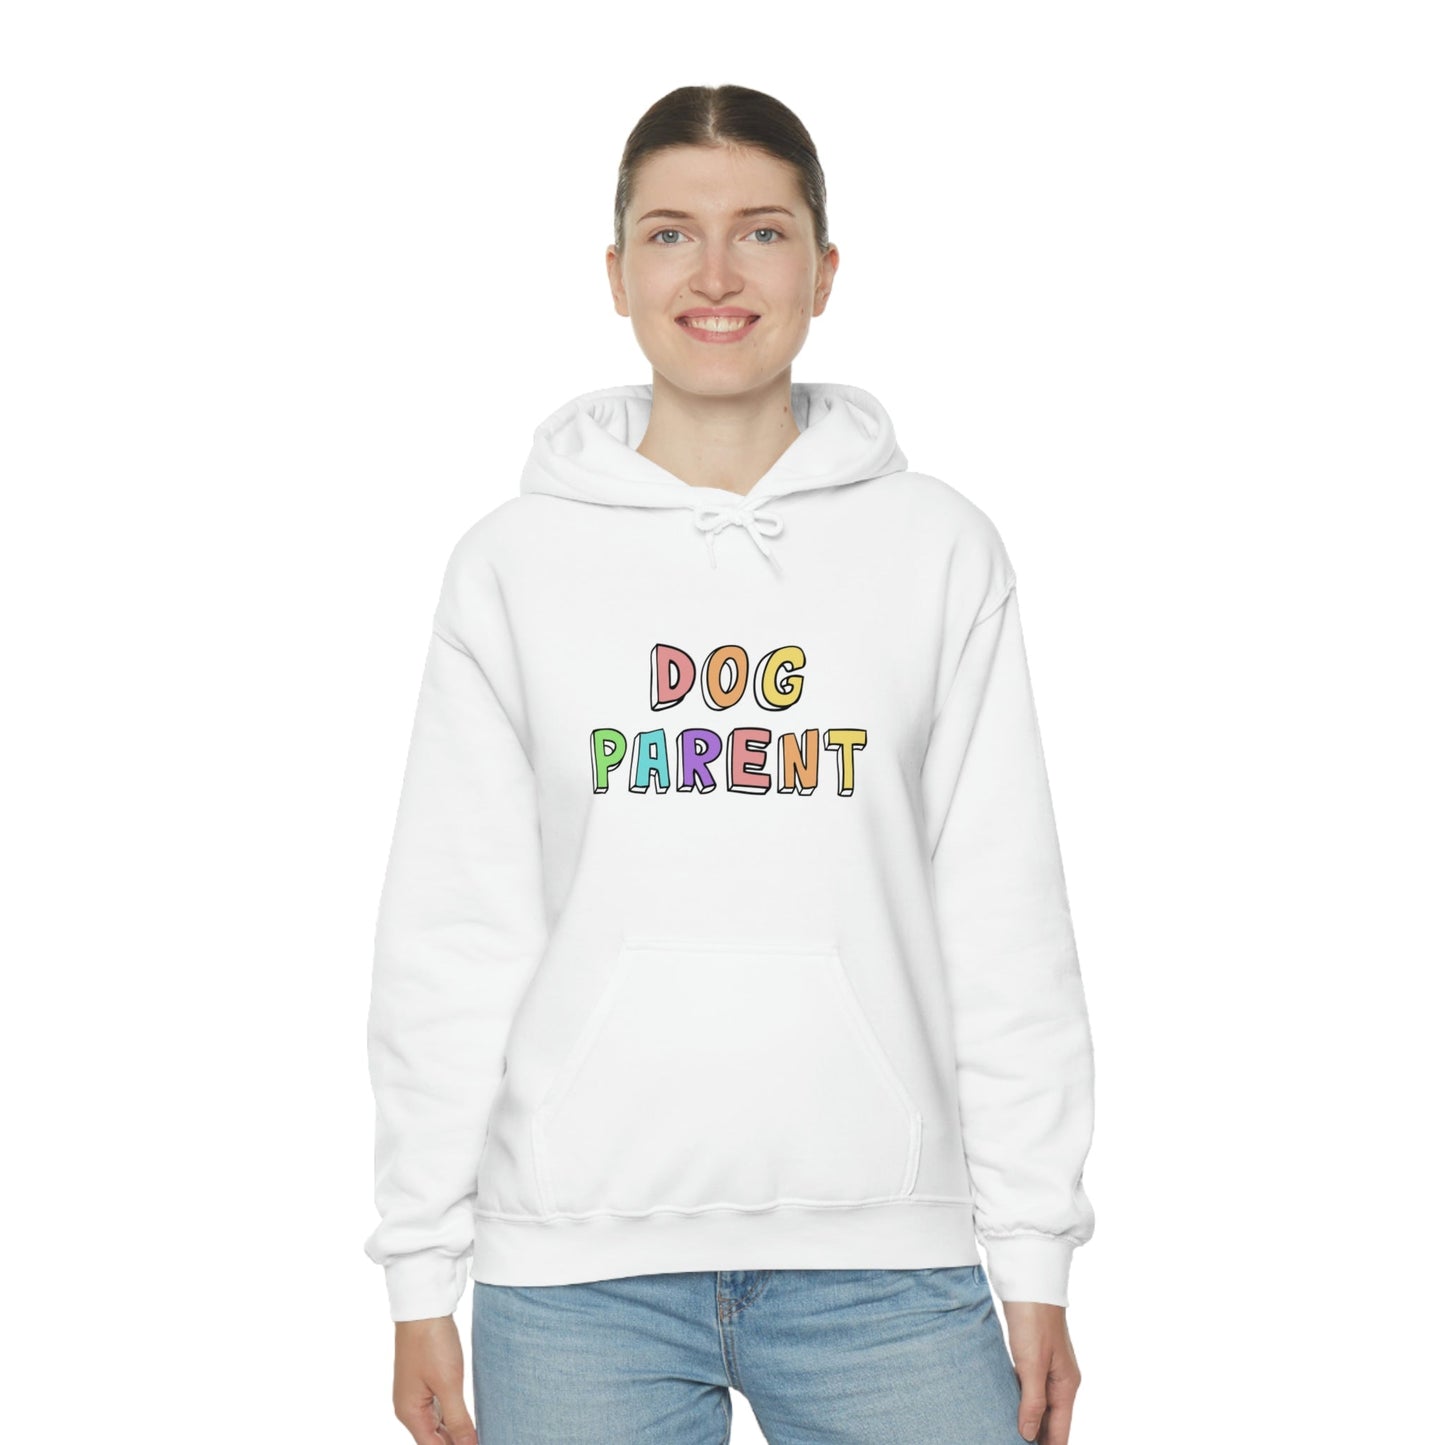 Dog Parent | Hooded Sweatshirt - Detezi Designs-19201502378345715761